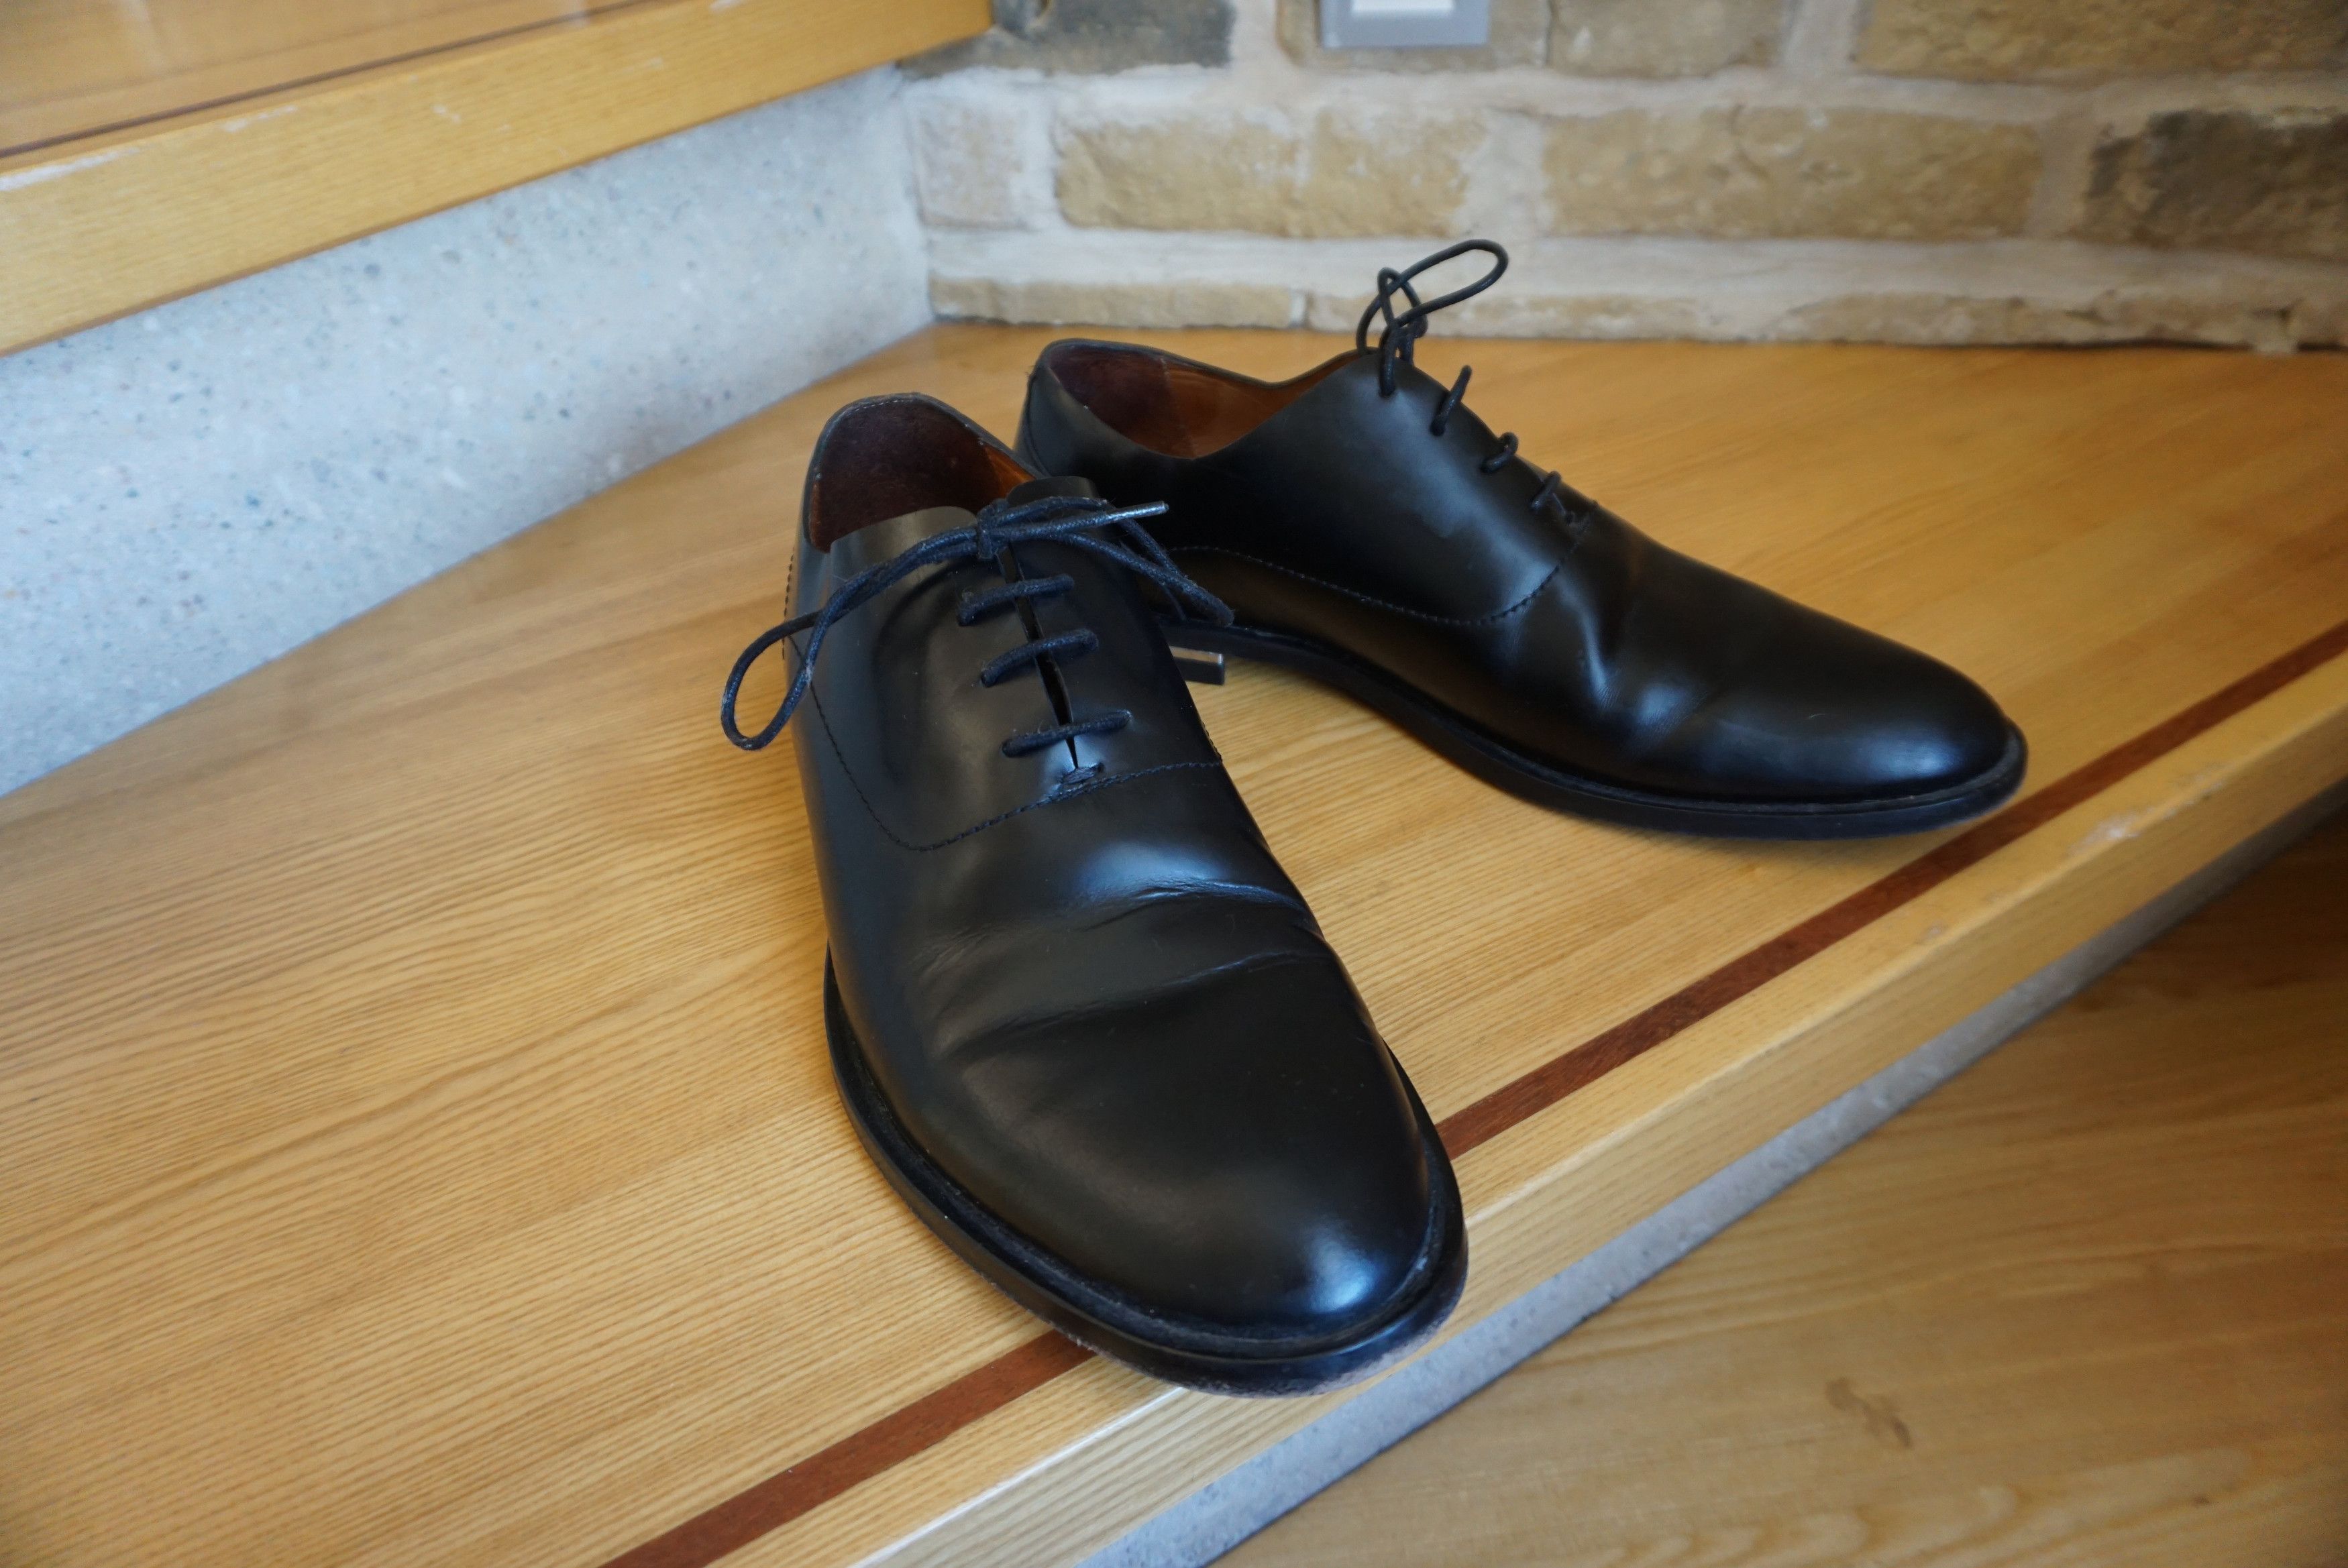 Cos COS RPR$250 leather office shoes EU44 black formal lace up Size US 10.5 / EU 43-44 - 16 Thumbnail